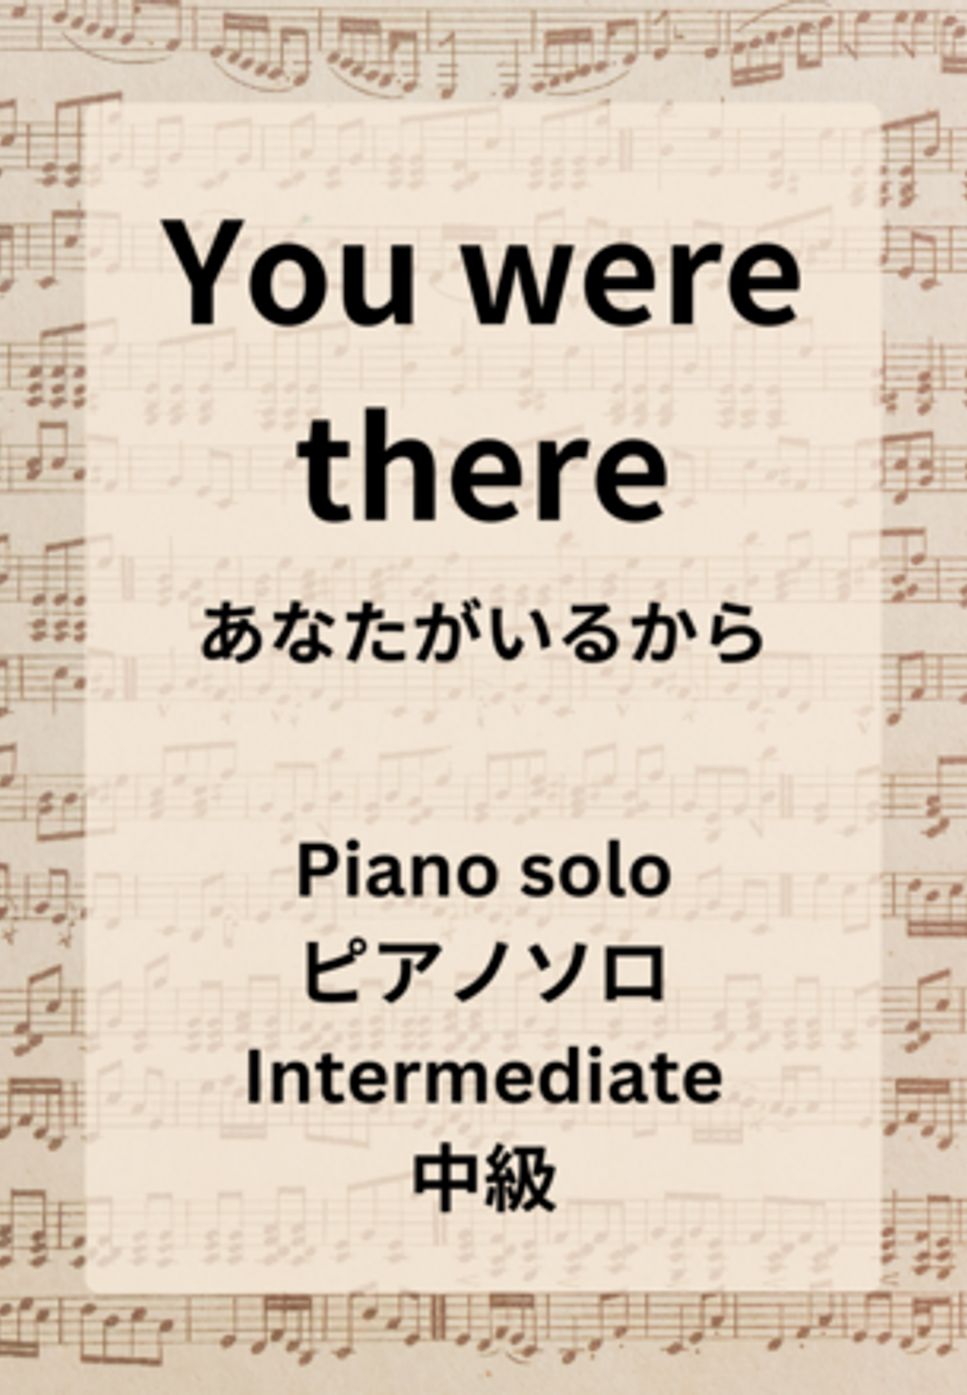 Takatsugu Muramatsu / Libera - You were there / Easy to play C major by Hiromiki Ono